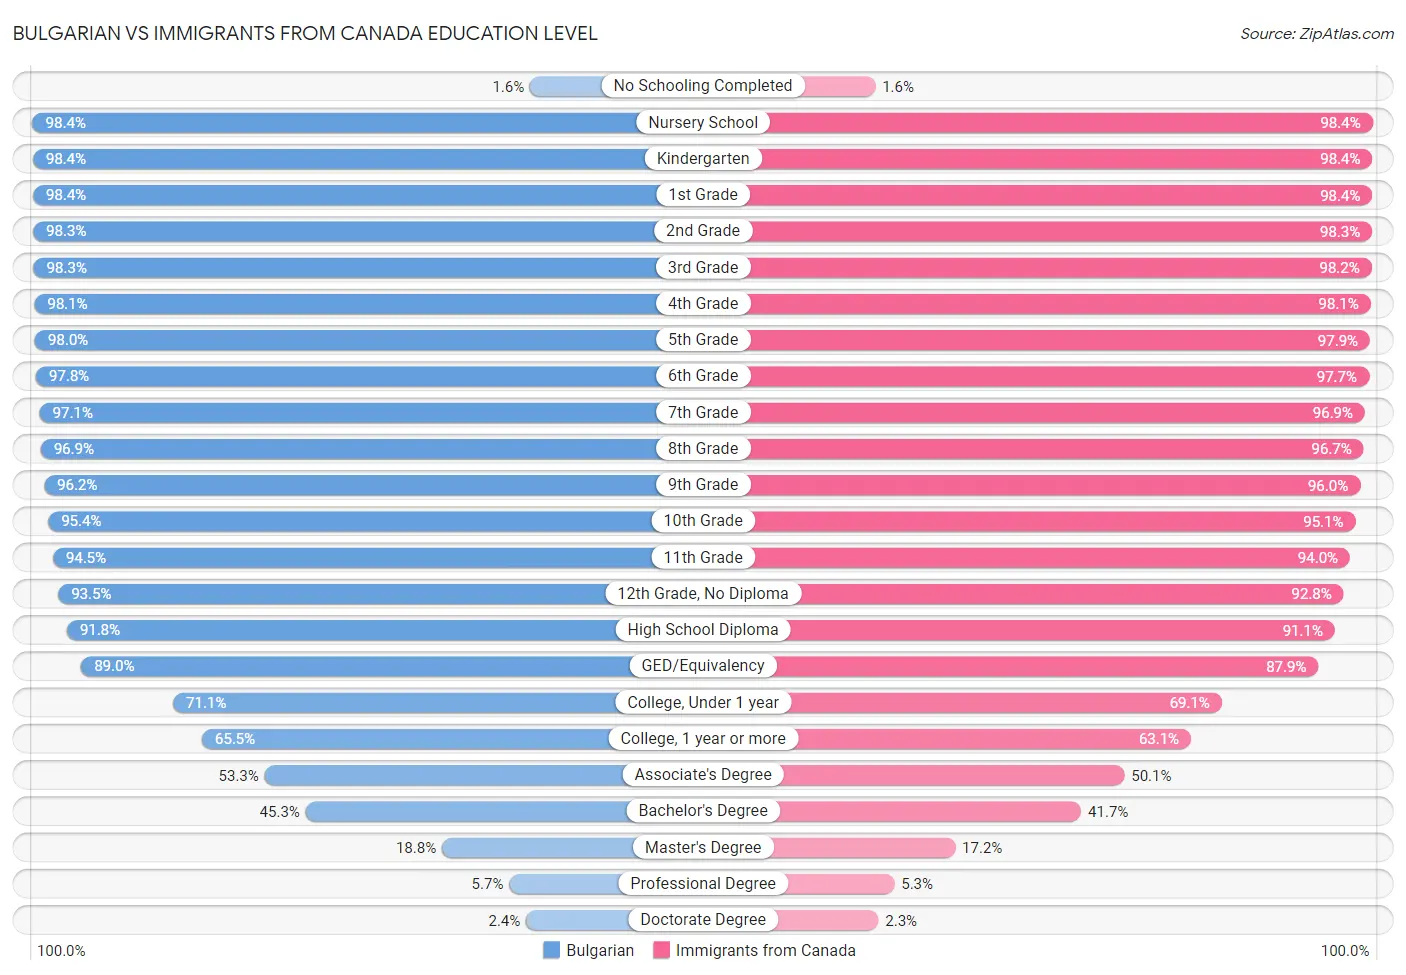 Bulgarian vs Immigrants from Canada Education Level